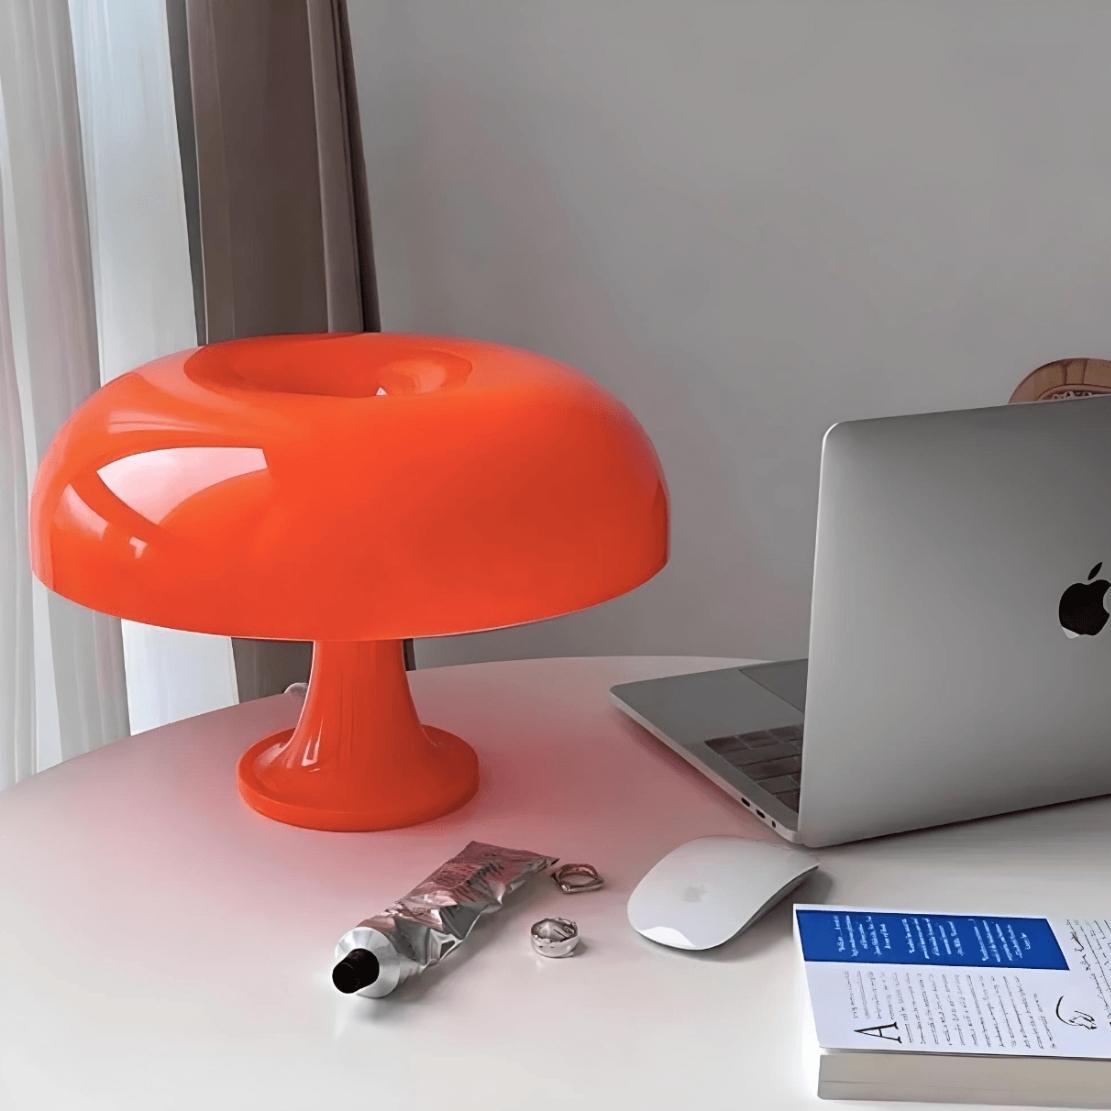 Retro cloud orange mushroom lamp on office table with laptop